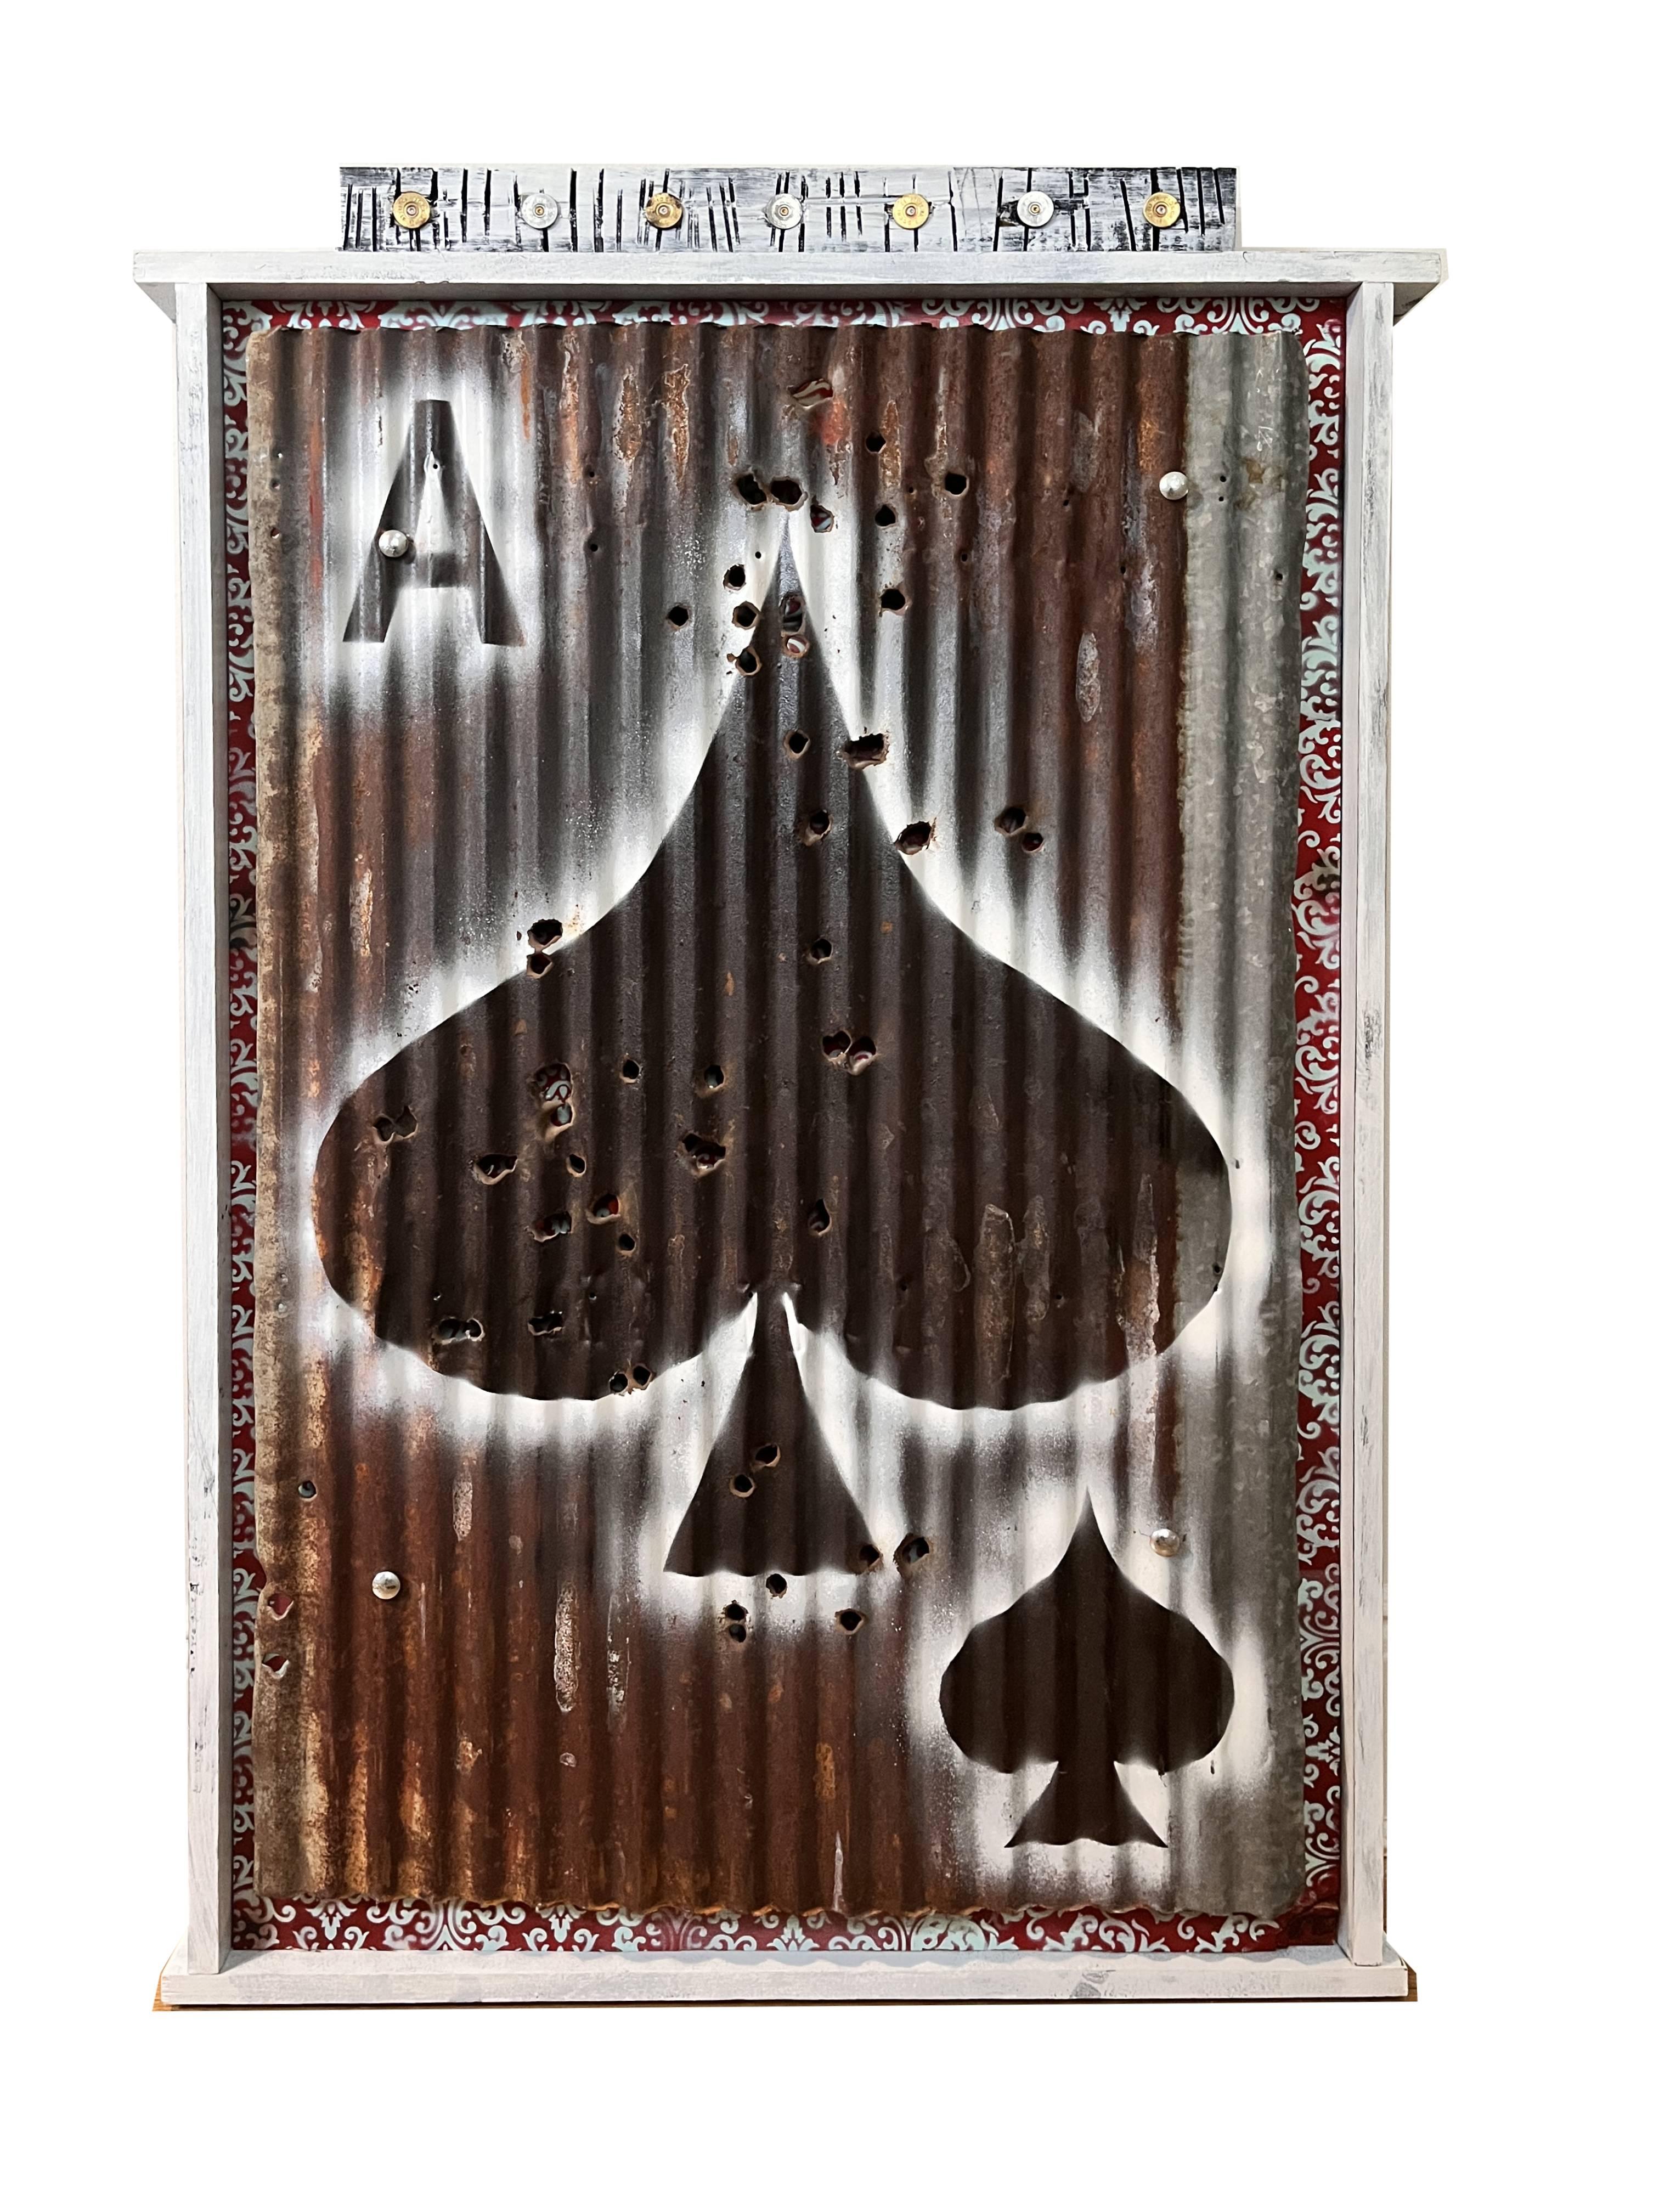 Ace of Spades — Deadman’s Hand - Mixed Media Art by David Richardson